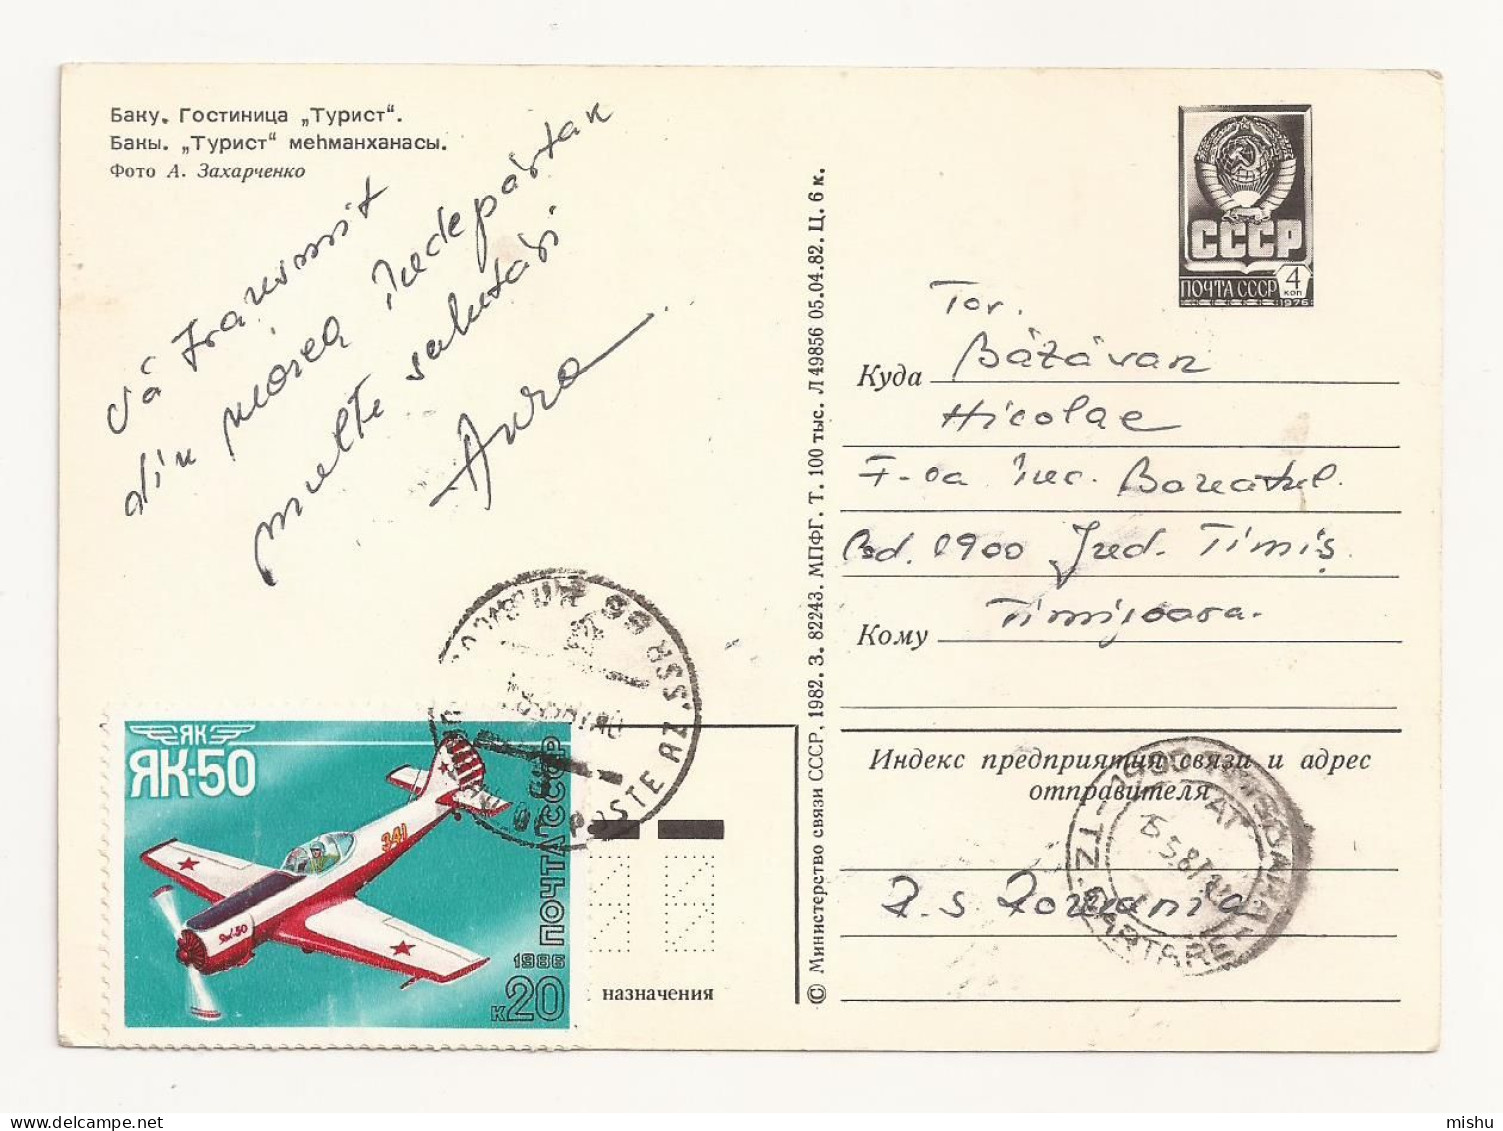 CP5 - Postcard - AZERBAIJAN - Turist” Hotel Baku, Azerbaijan, Circulated 1982 - Azerbaigian